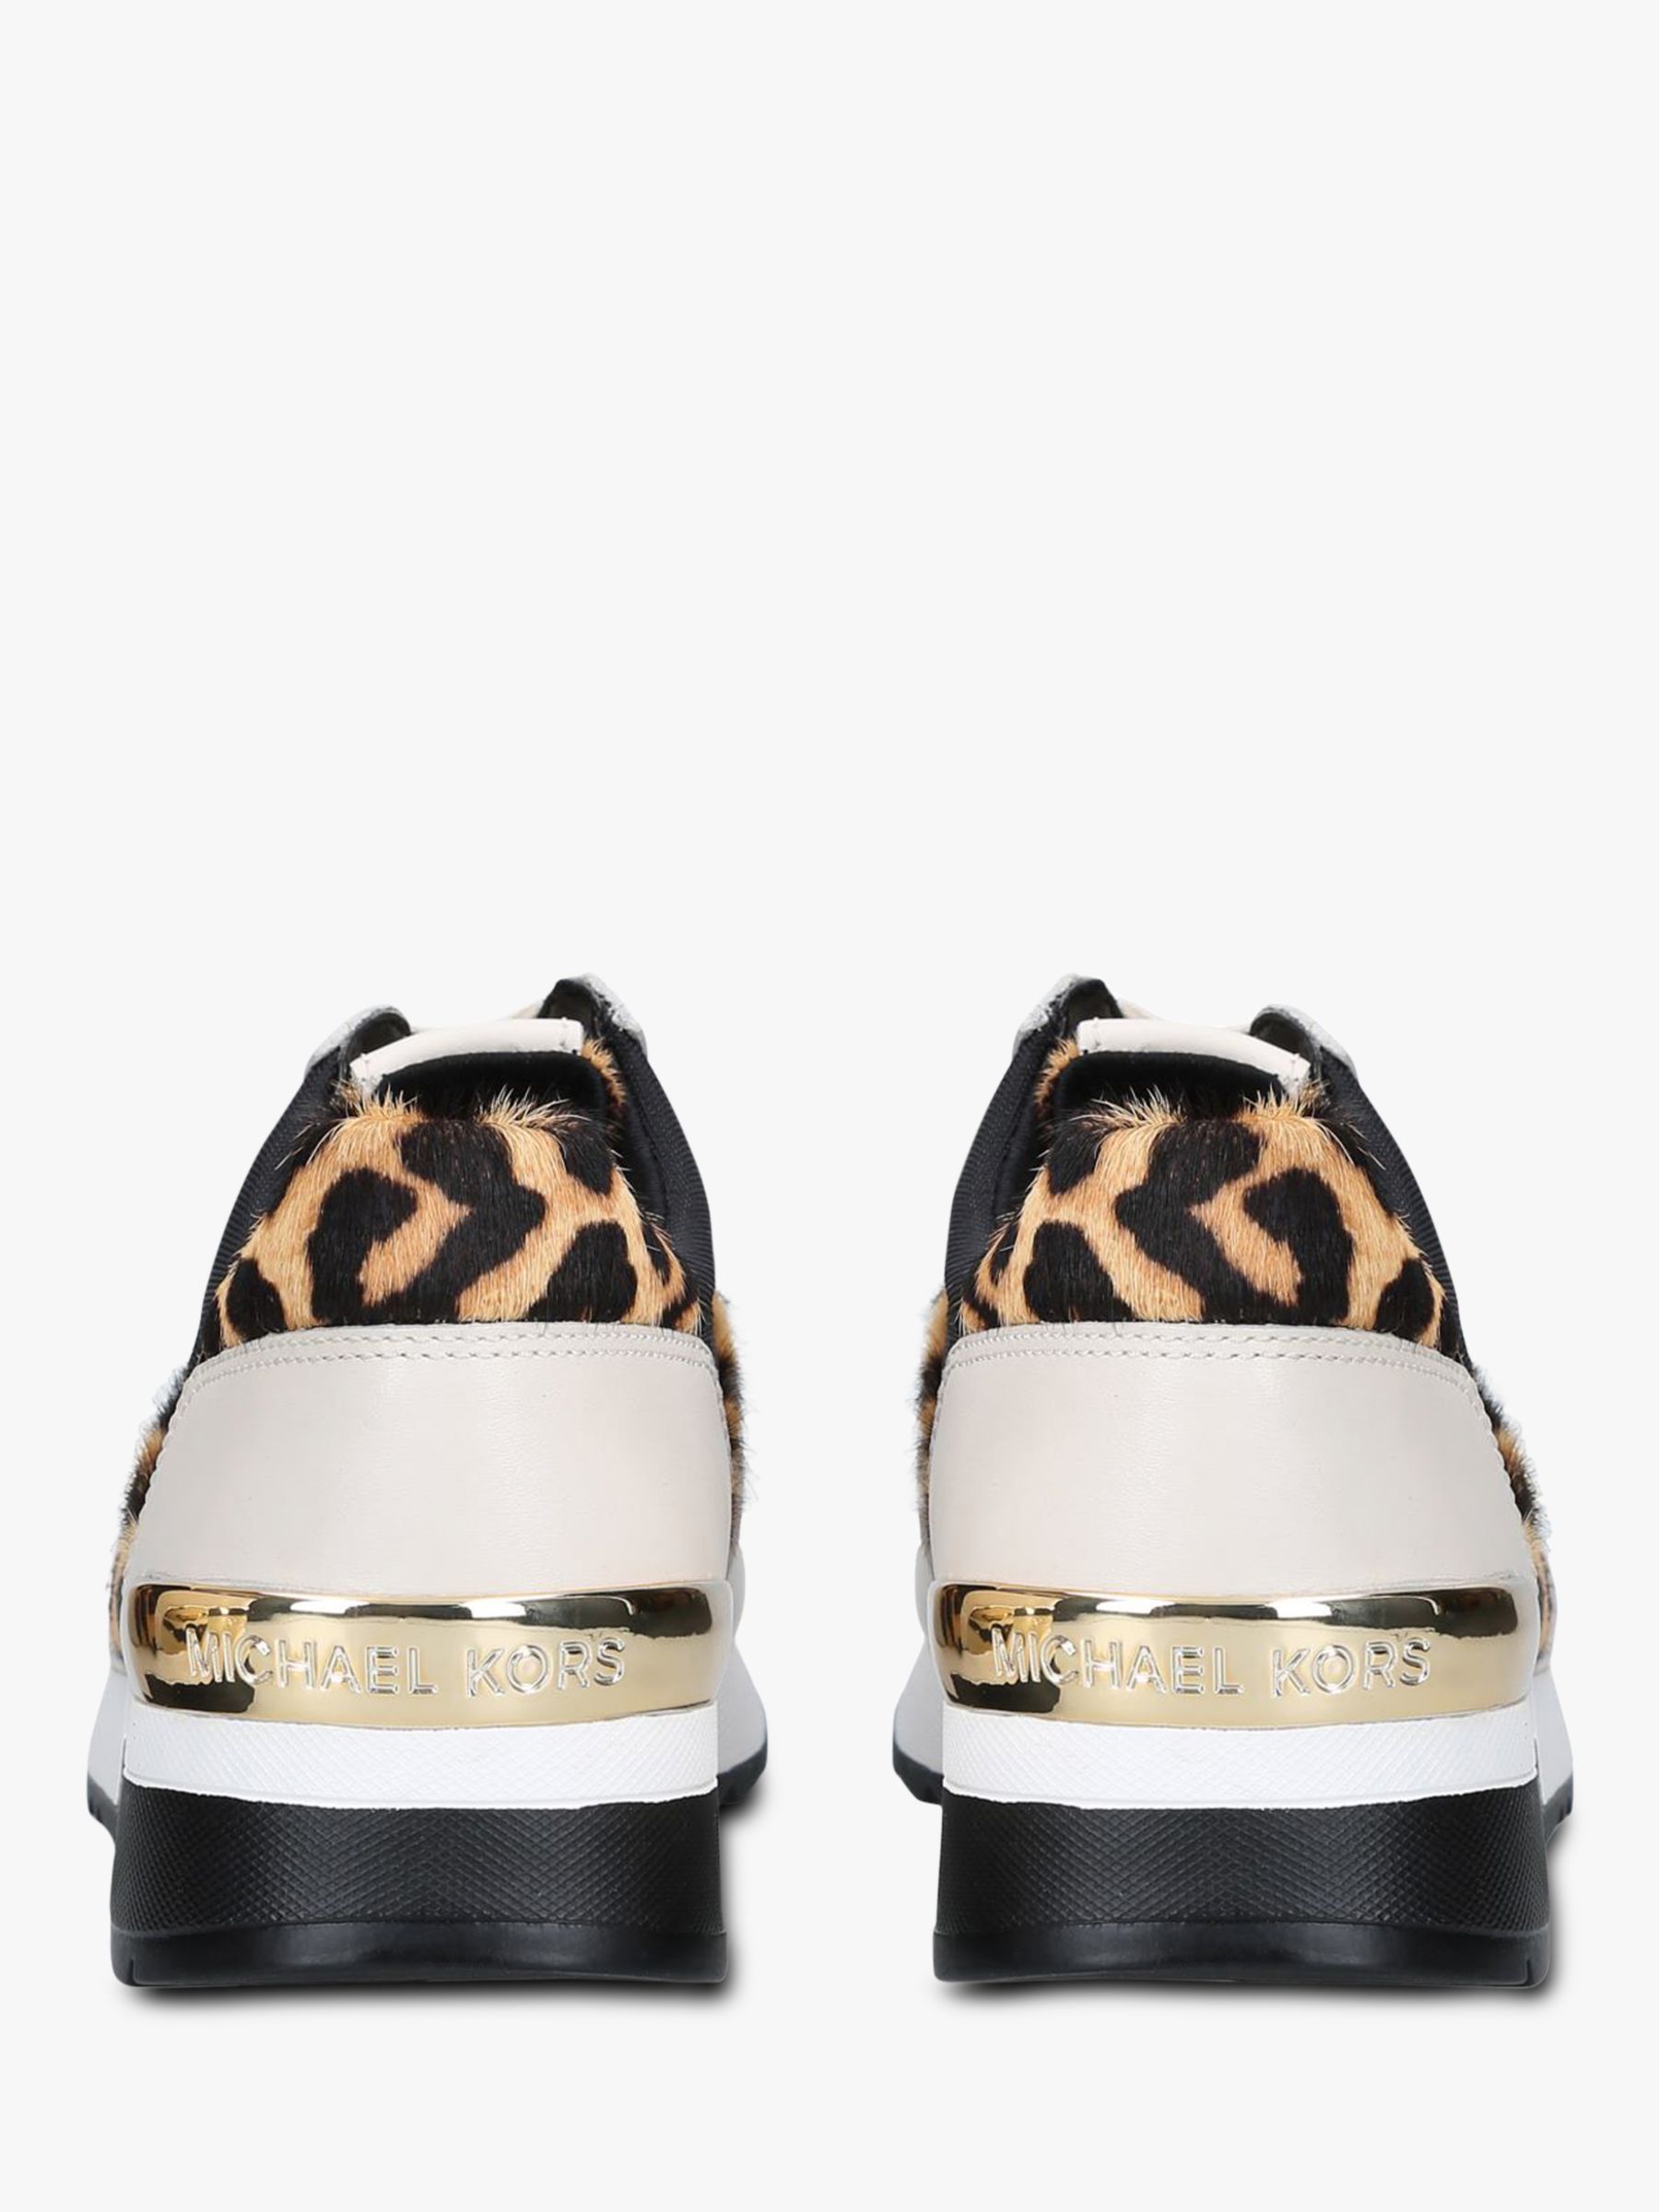 michael kors sneakers leopard